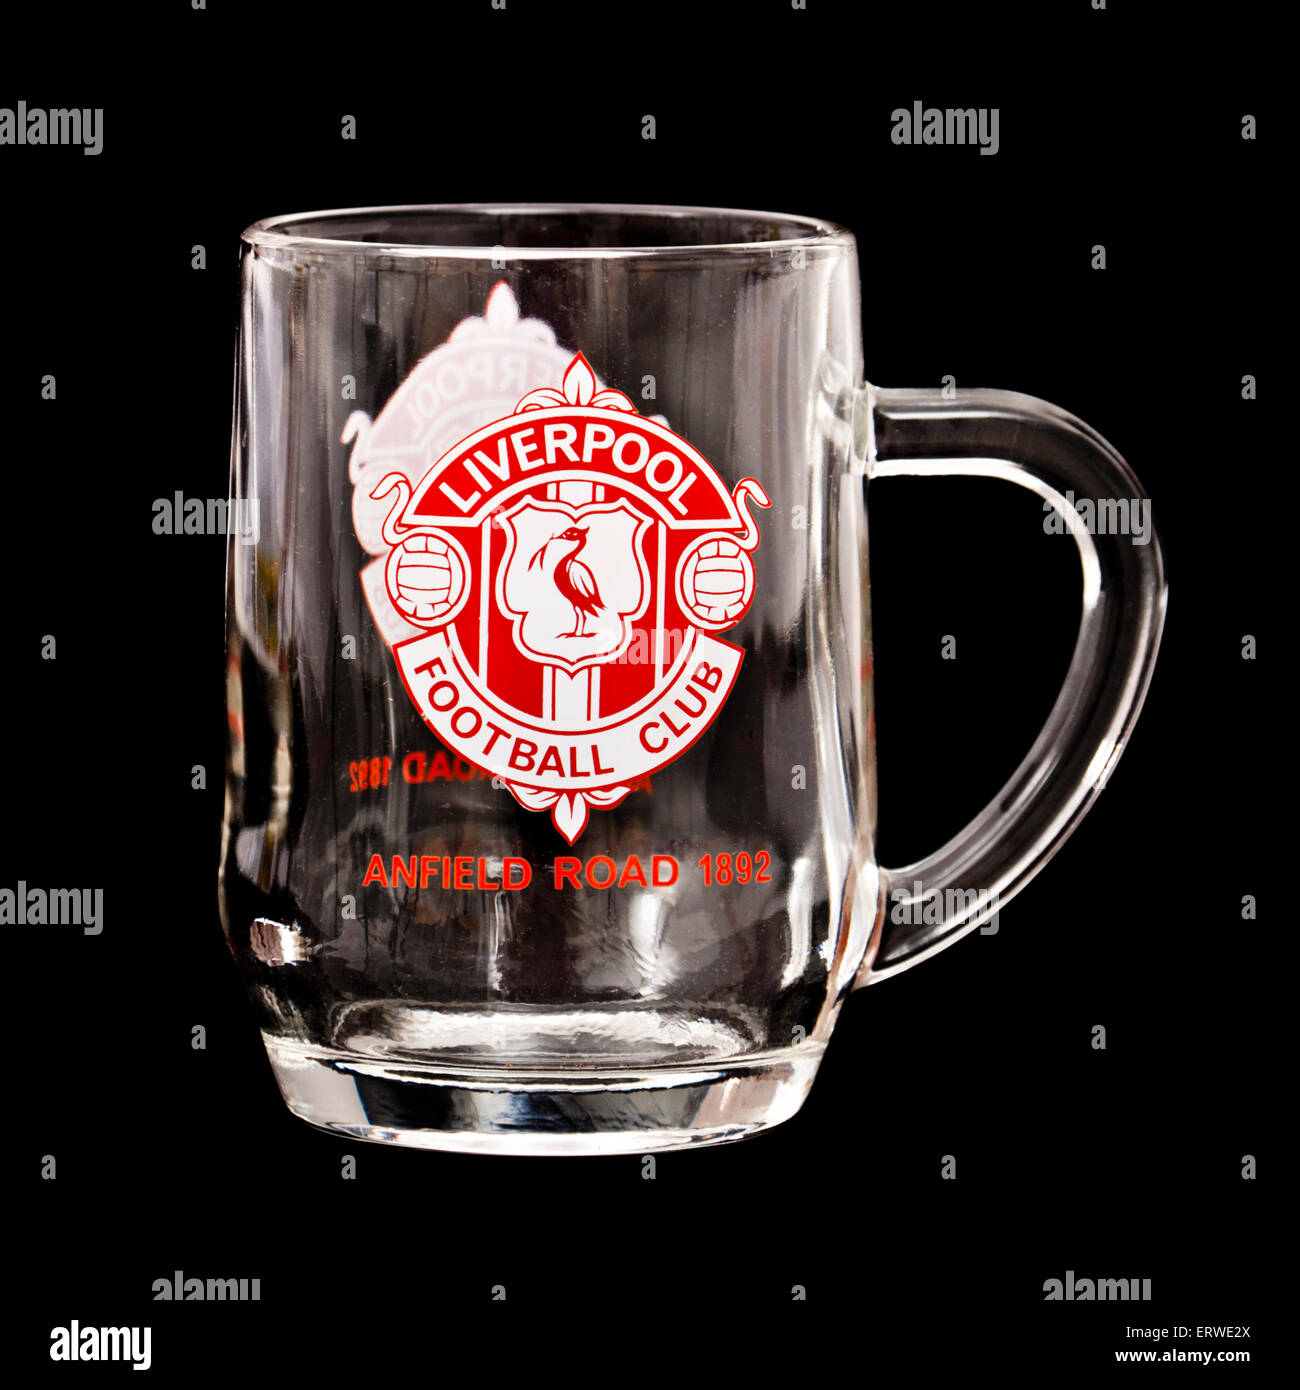 Liverpool Football Club promotional glass mug Stock Photo